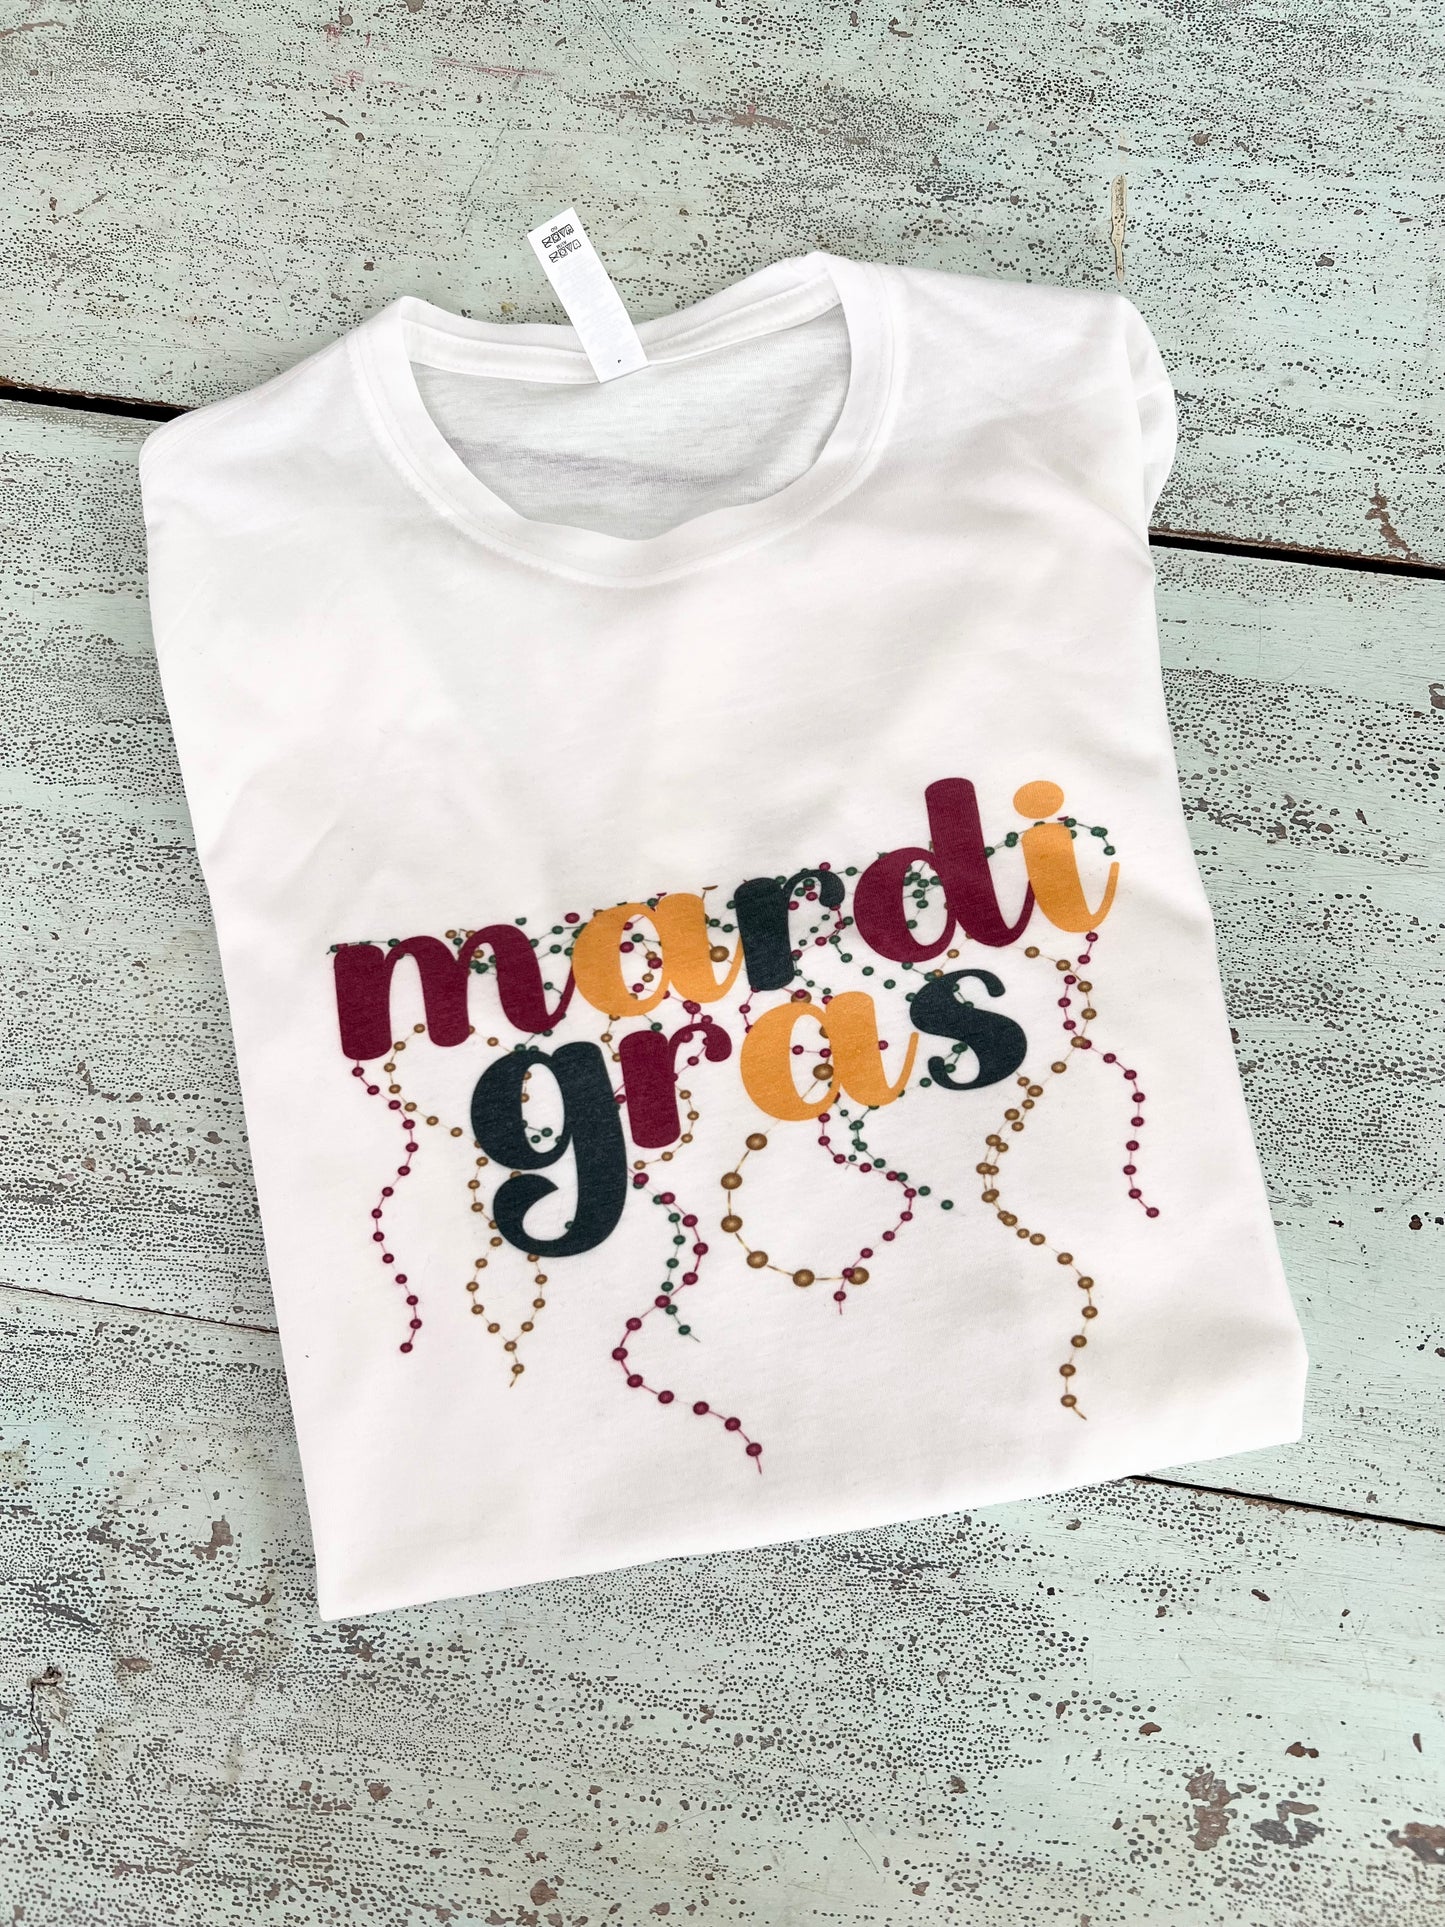 Mardi Gras with Beads shirt